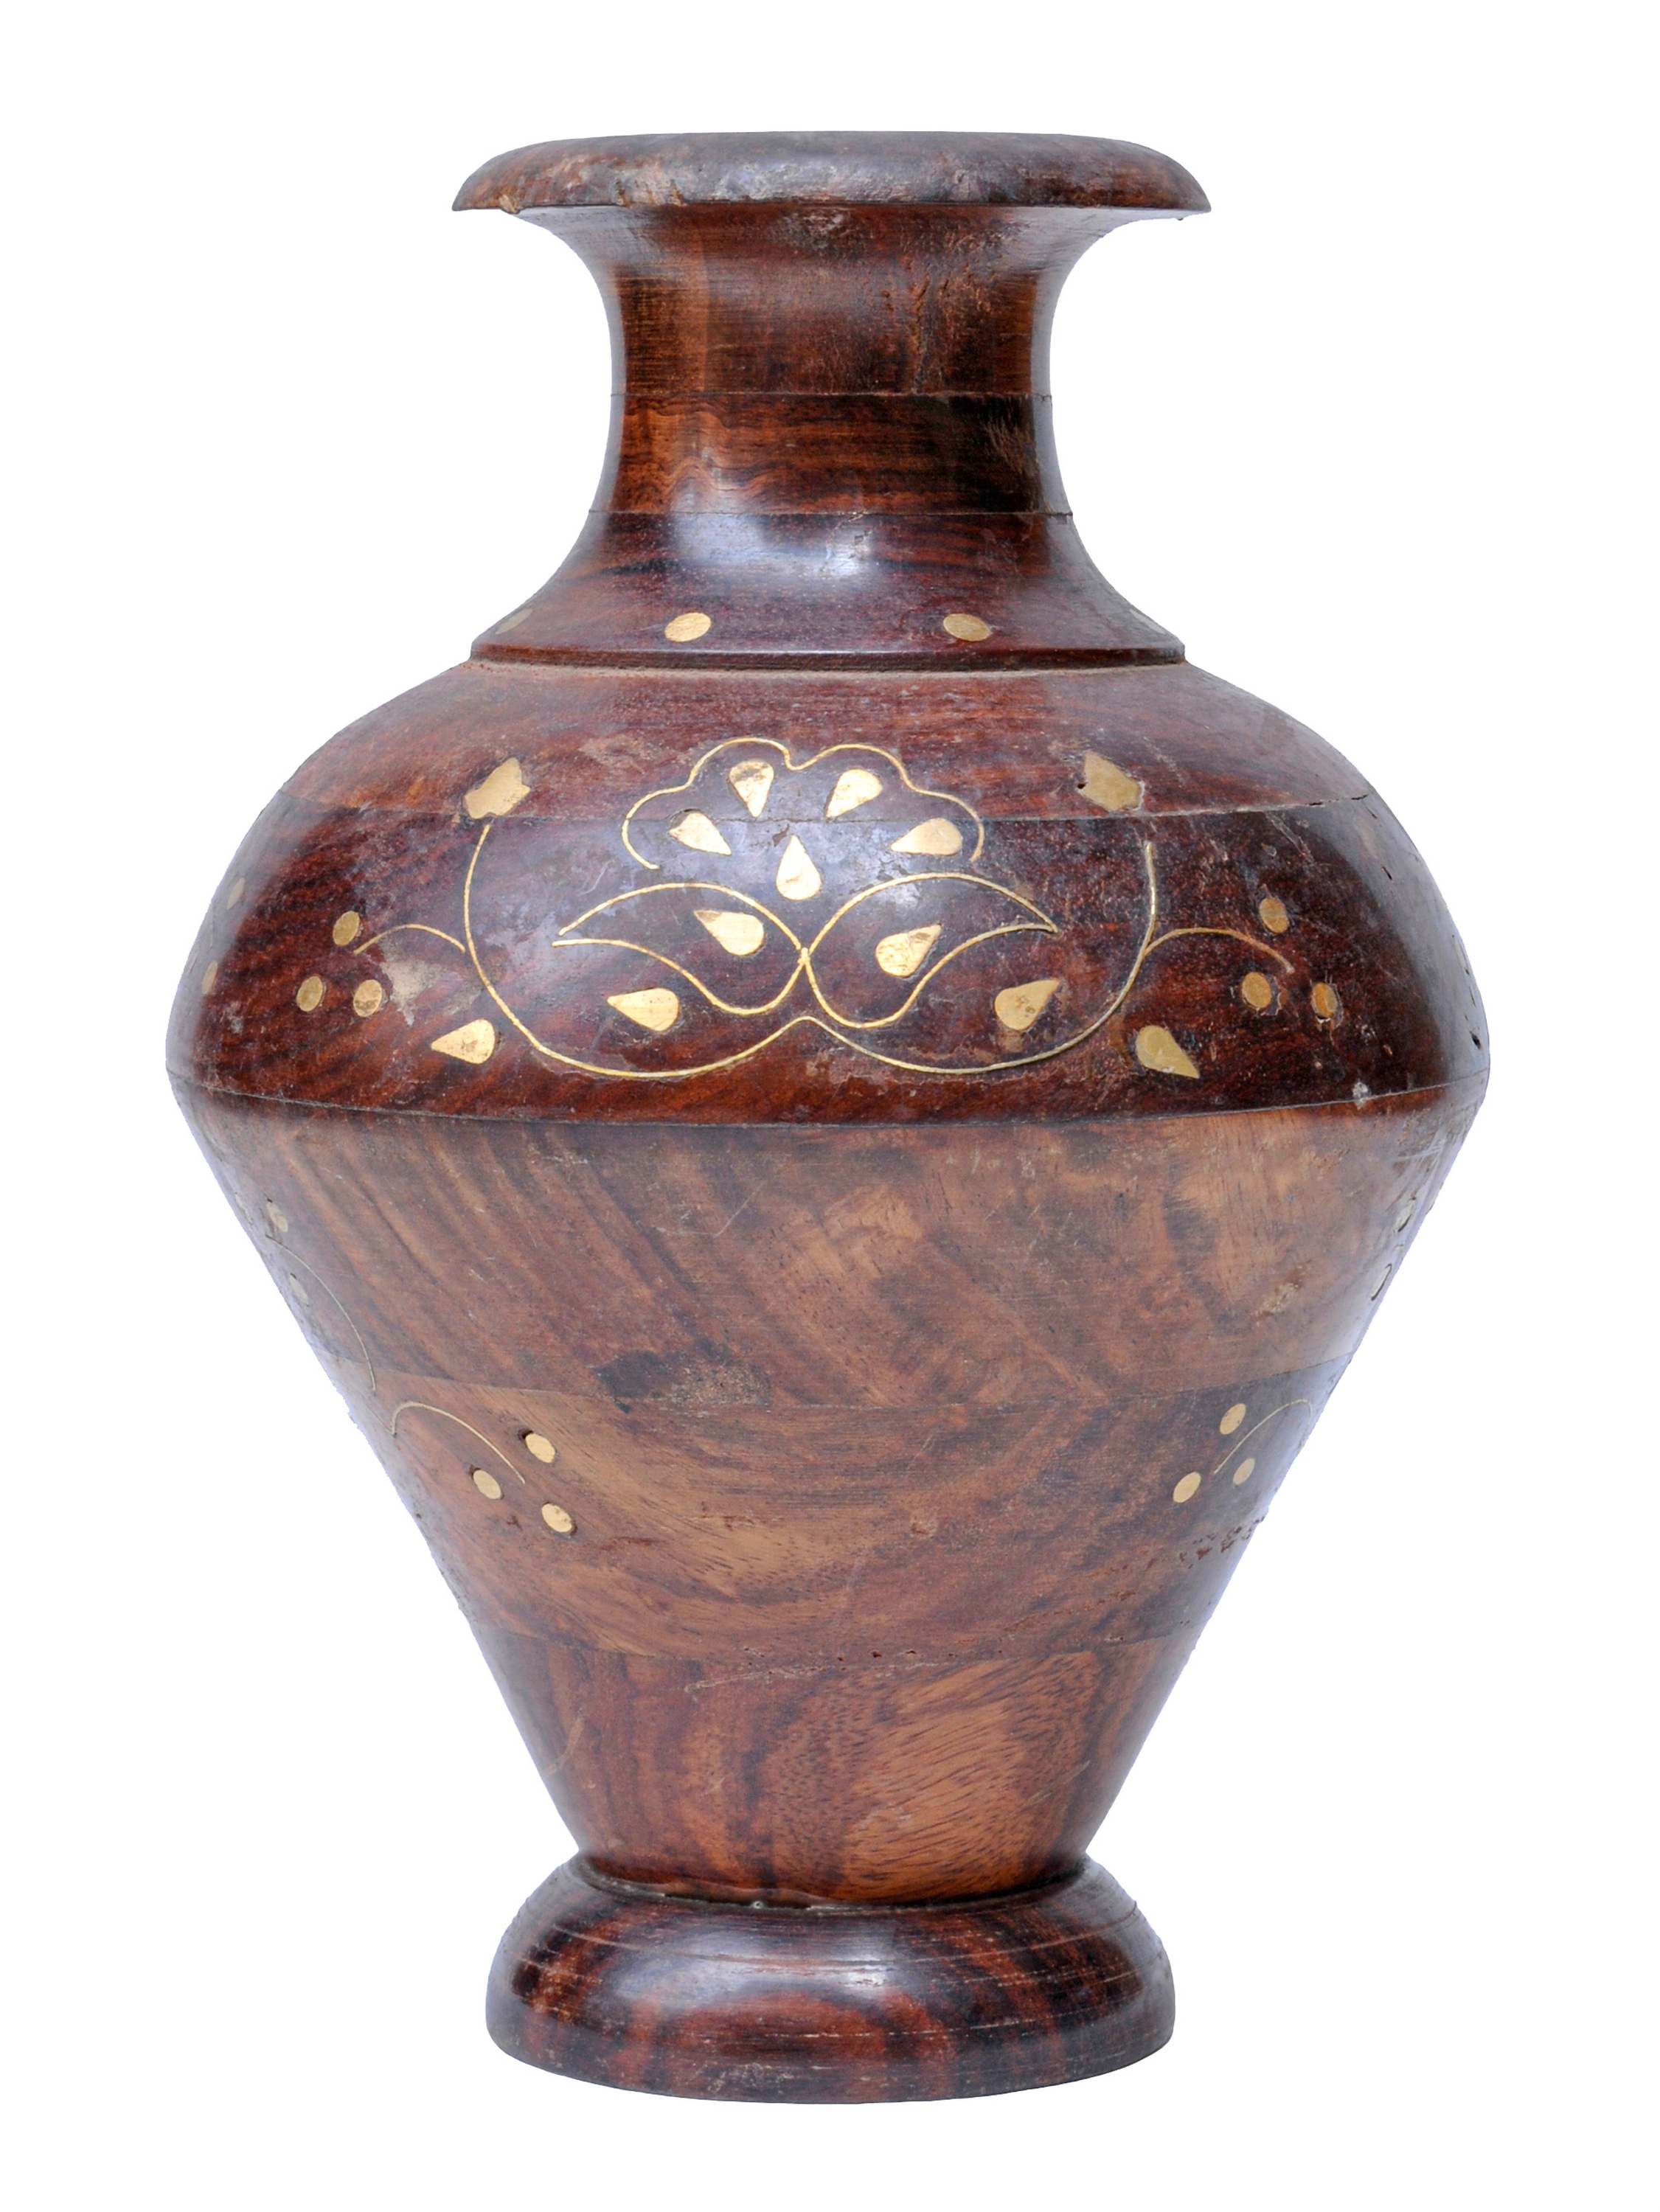 Wooden Handmade Flower Vase With Printed Design